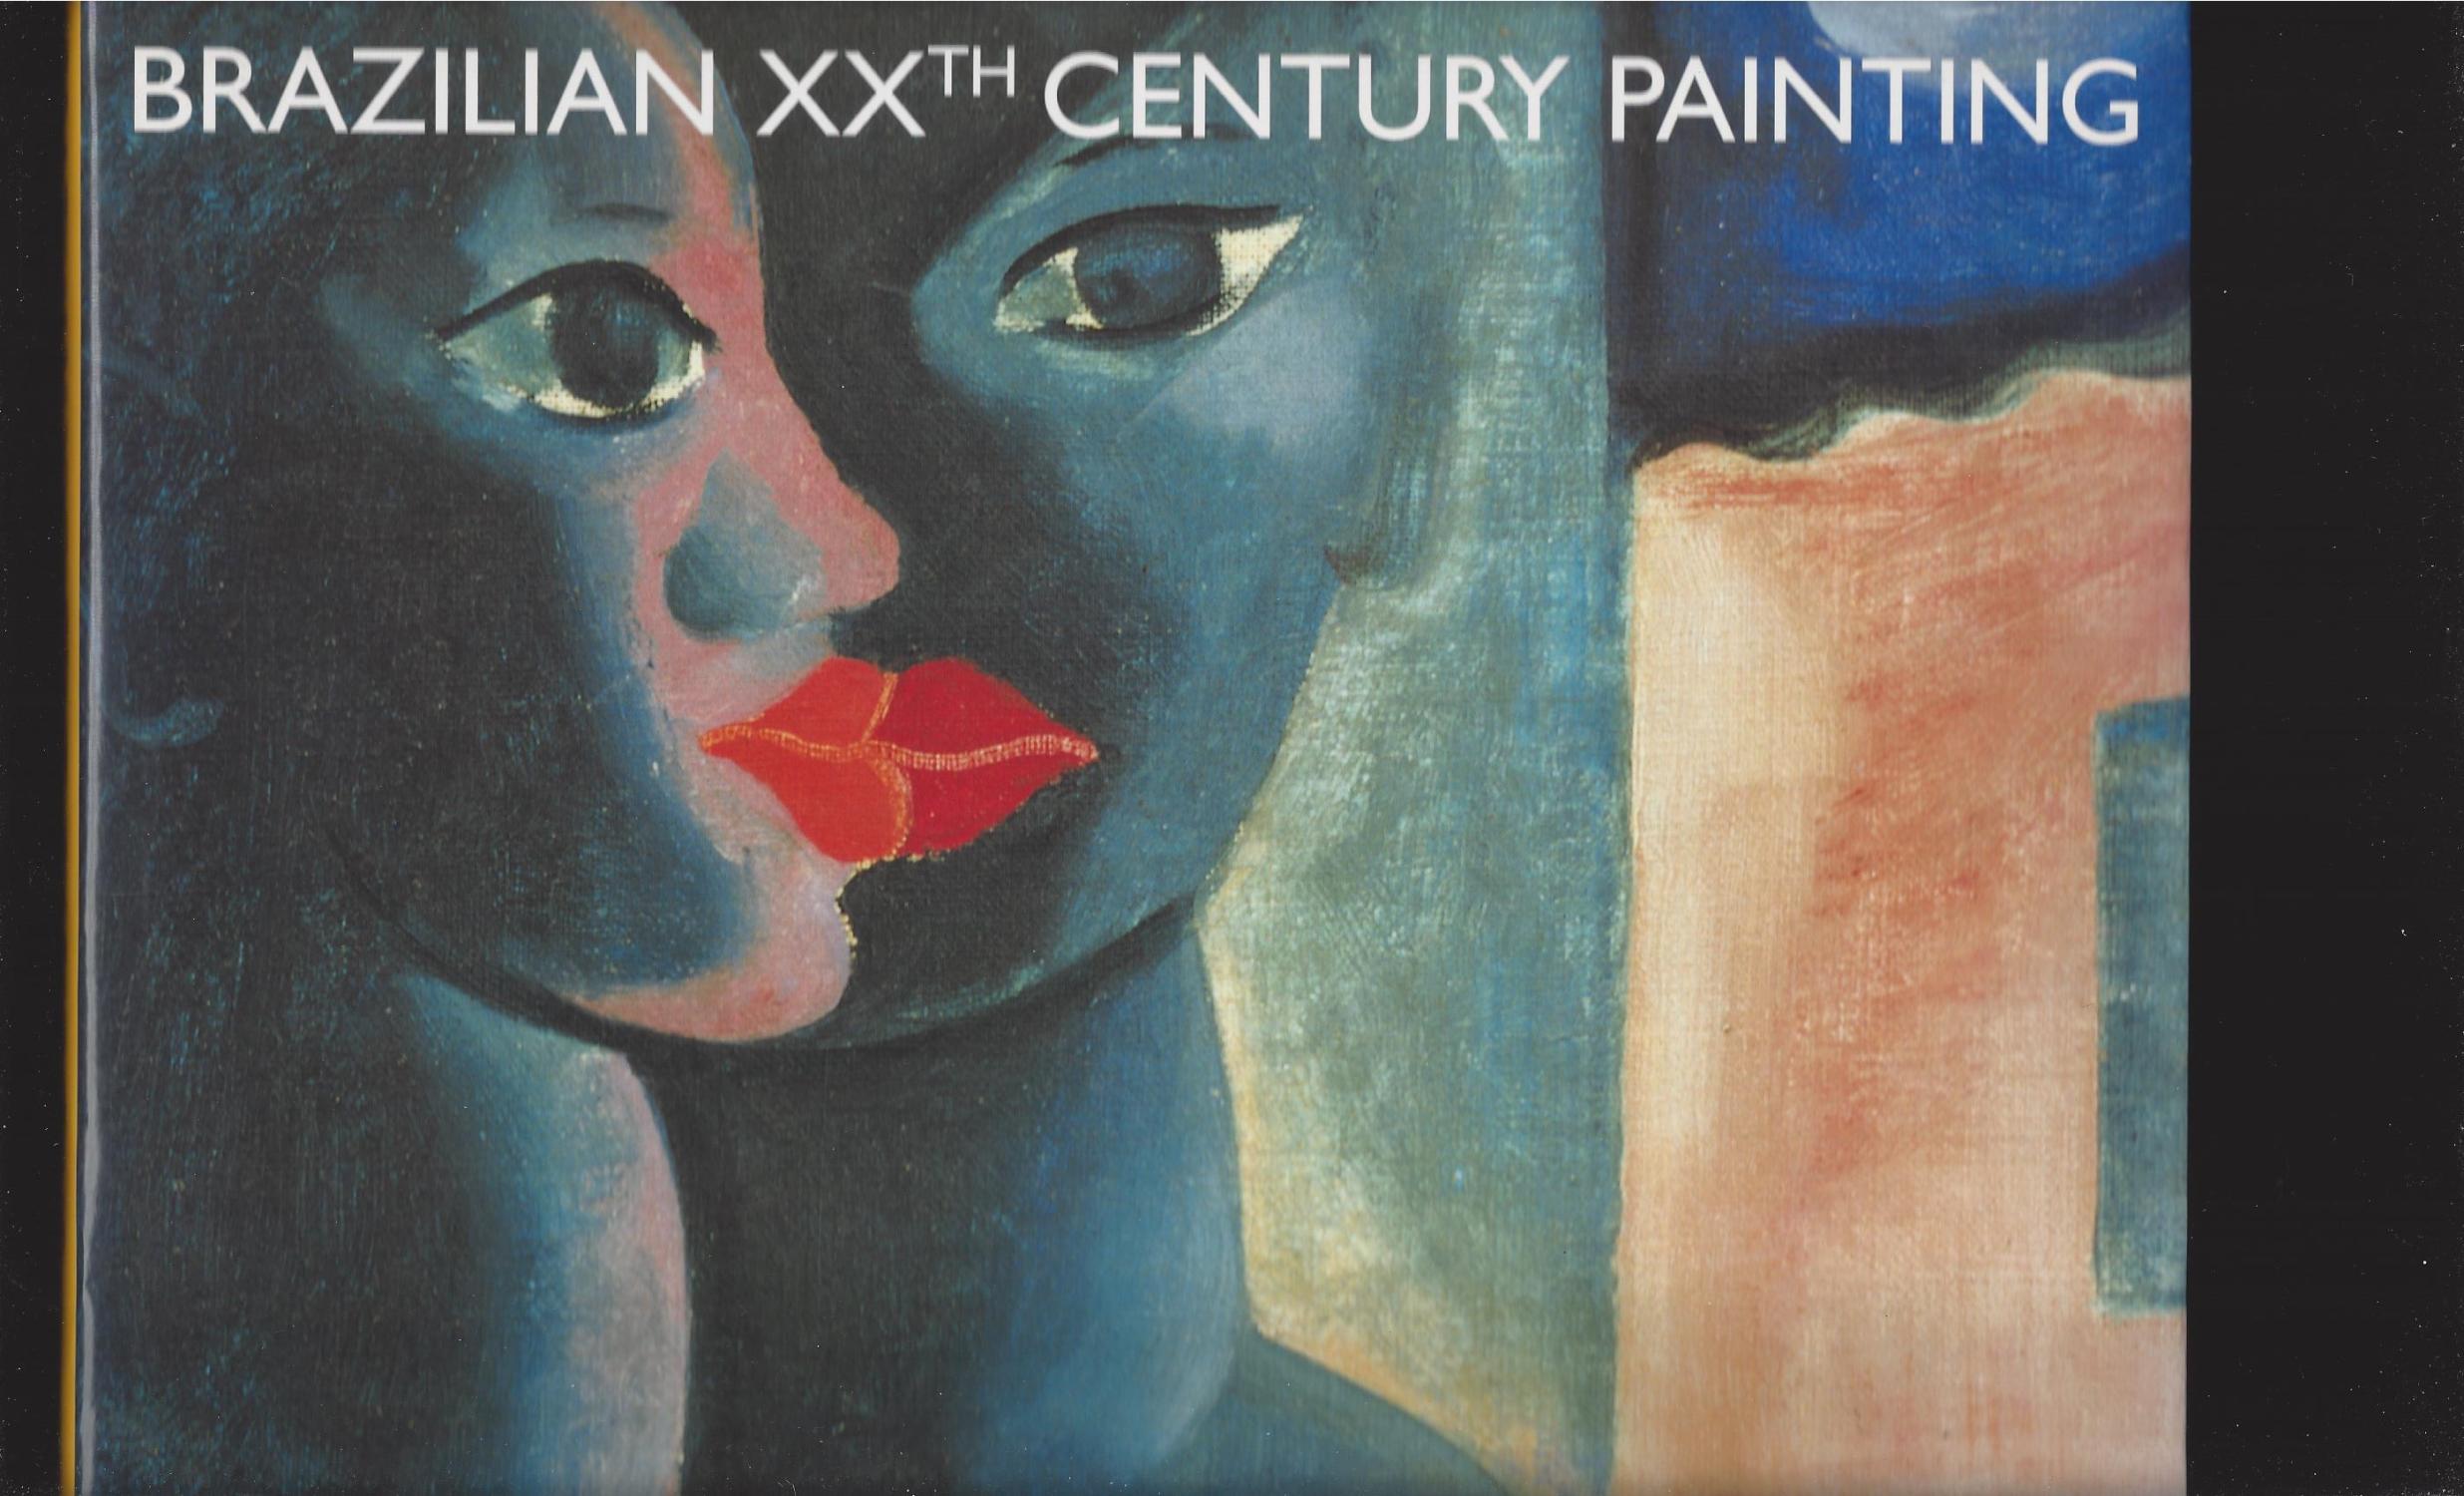 Brazilian XXth Century Painting: Significant Trends - Olivio Tavares de Araújo